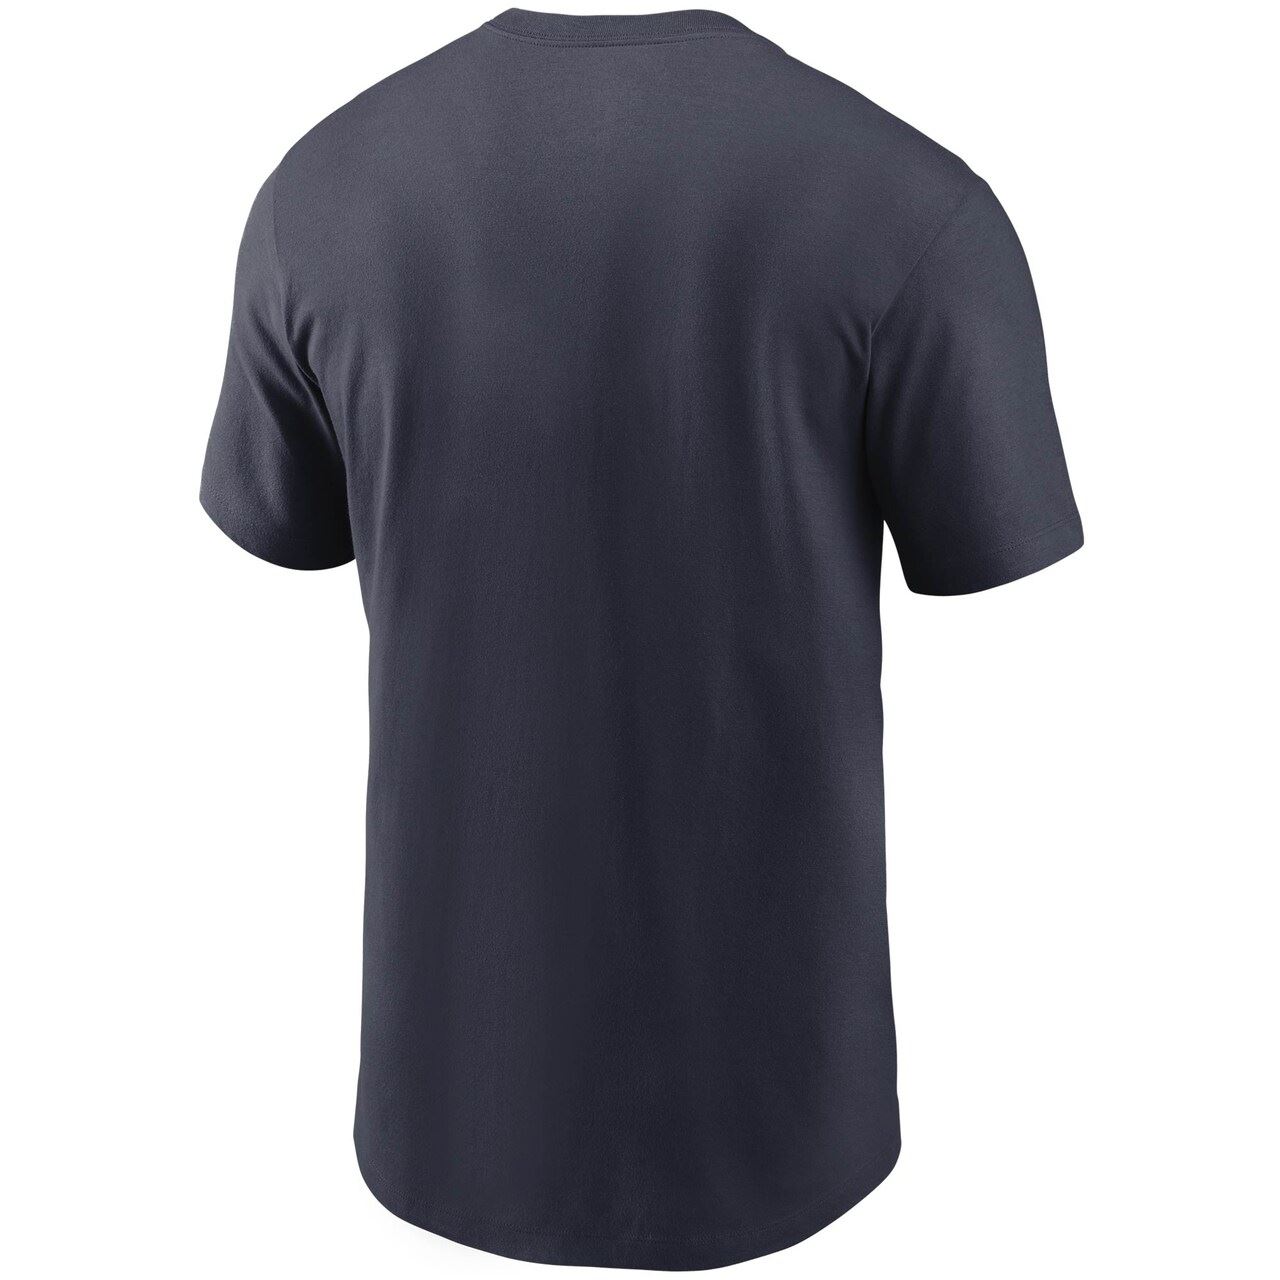 Chicago Bears NFL Split Team Name Essential Tee Marine T-Shirt Nike